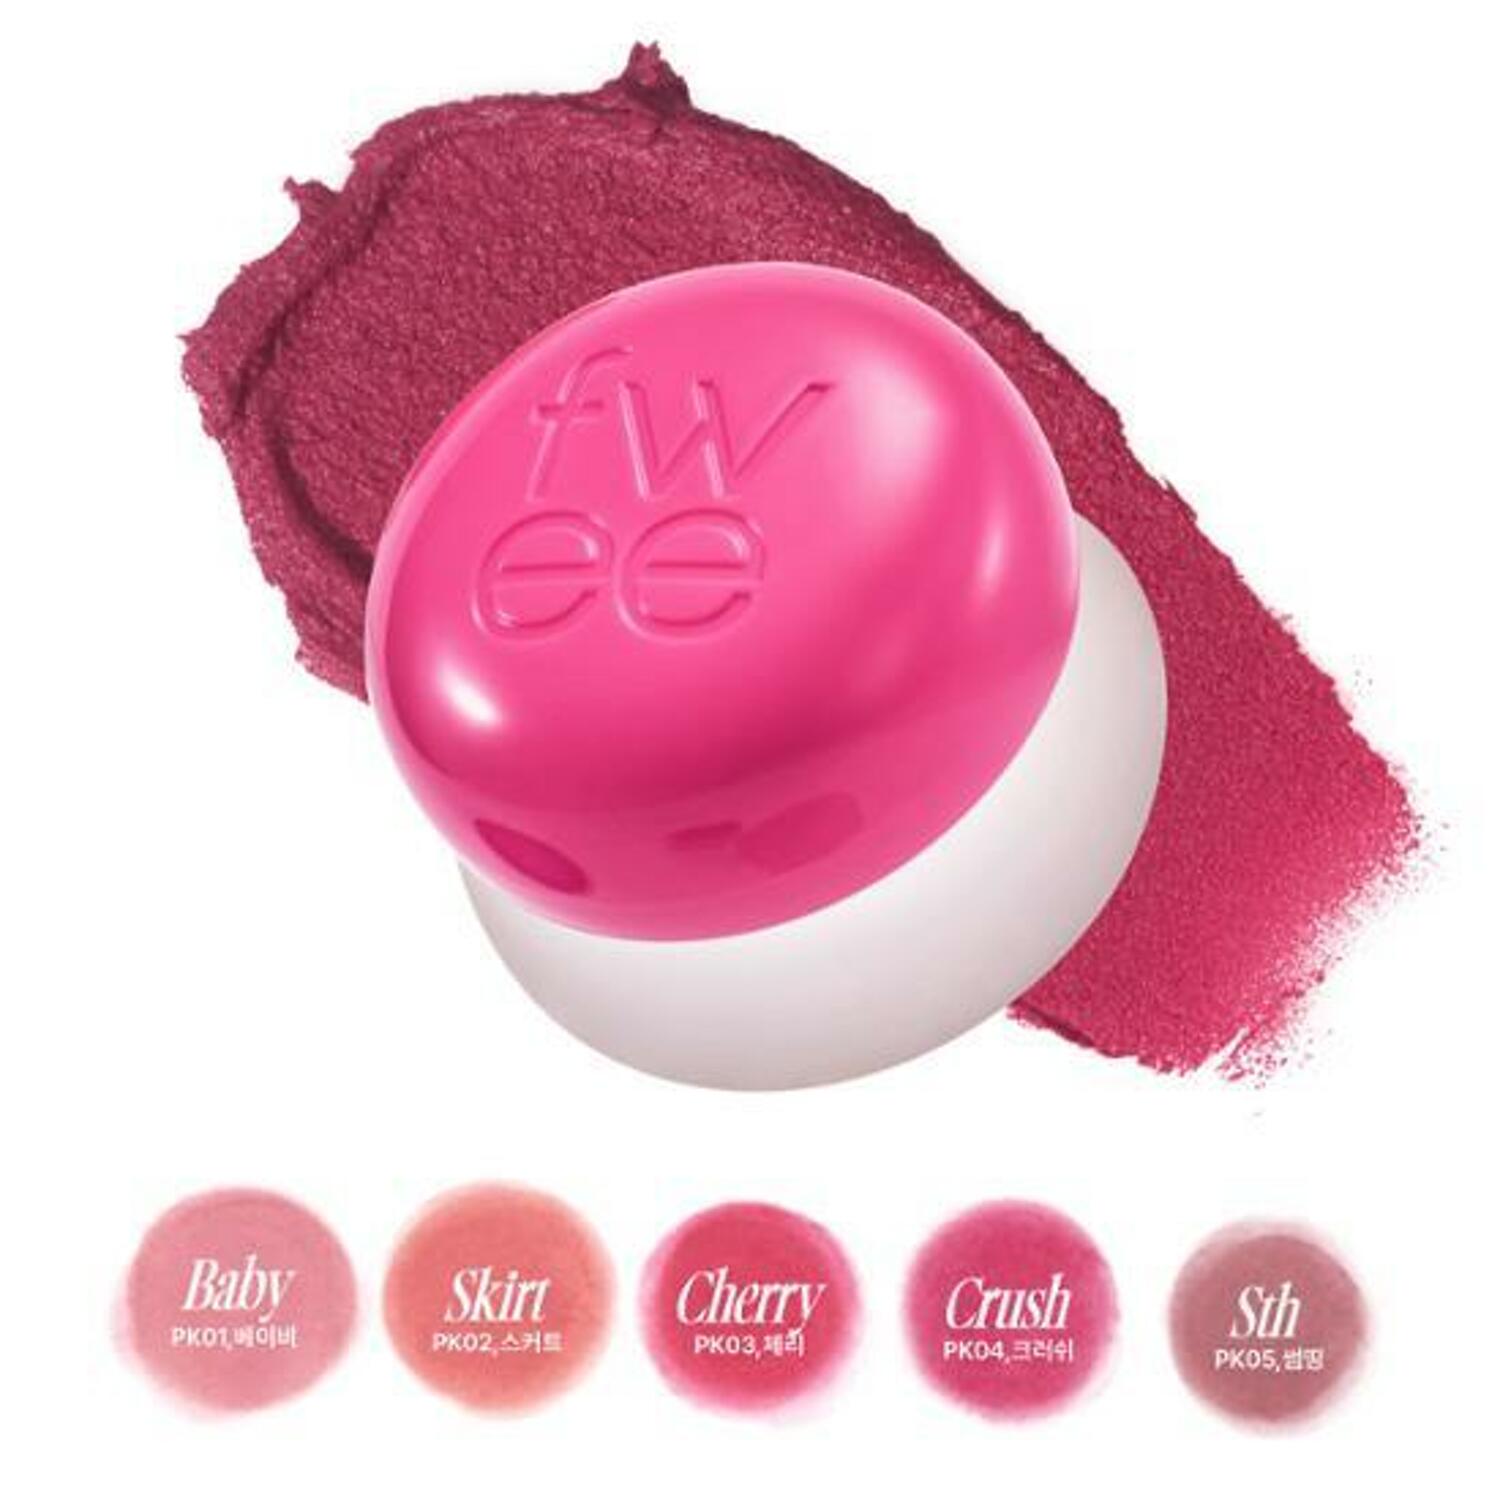 Fwee Lip & Cheek Blurry Pudding Pot 5g (30 Colors)